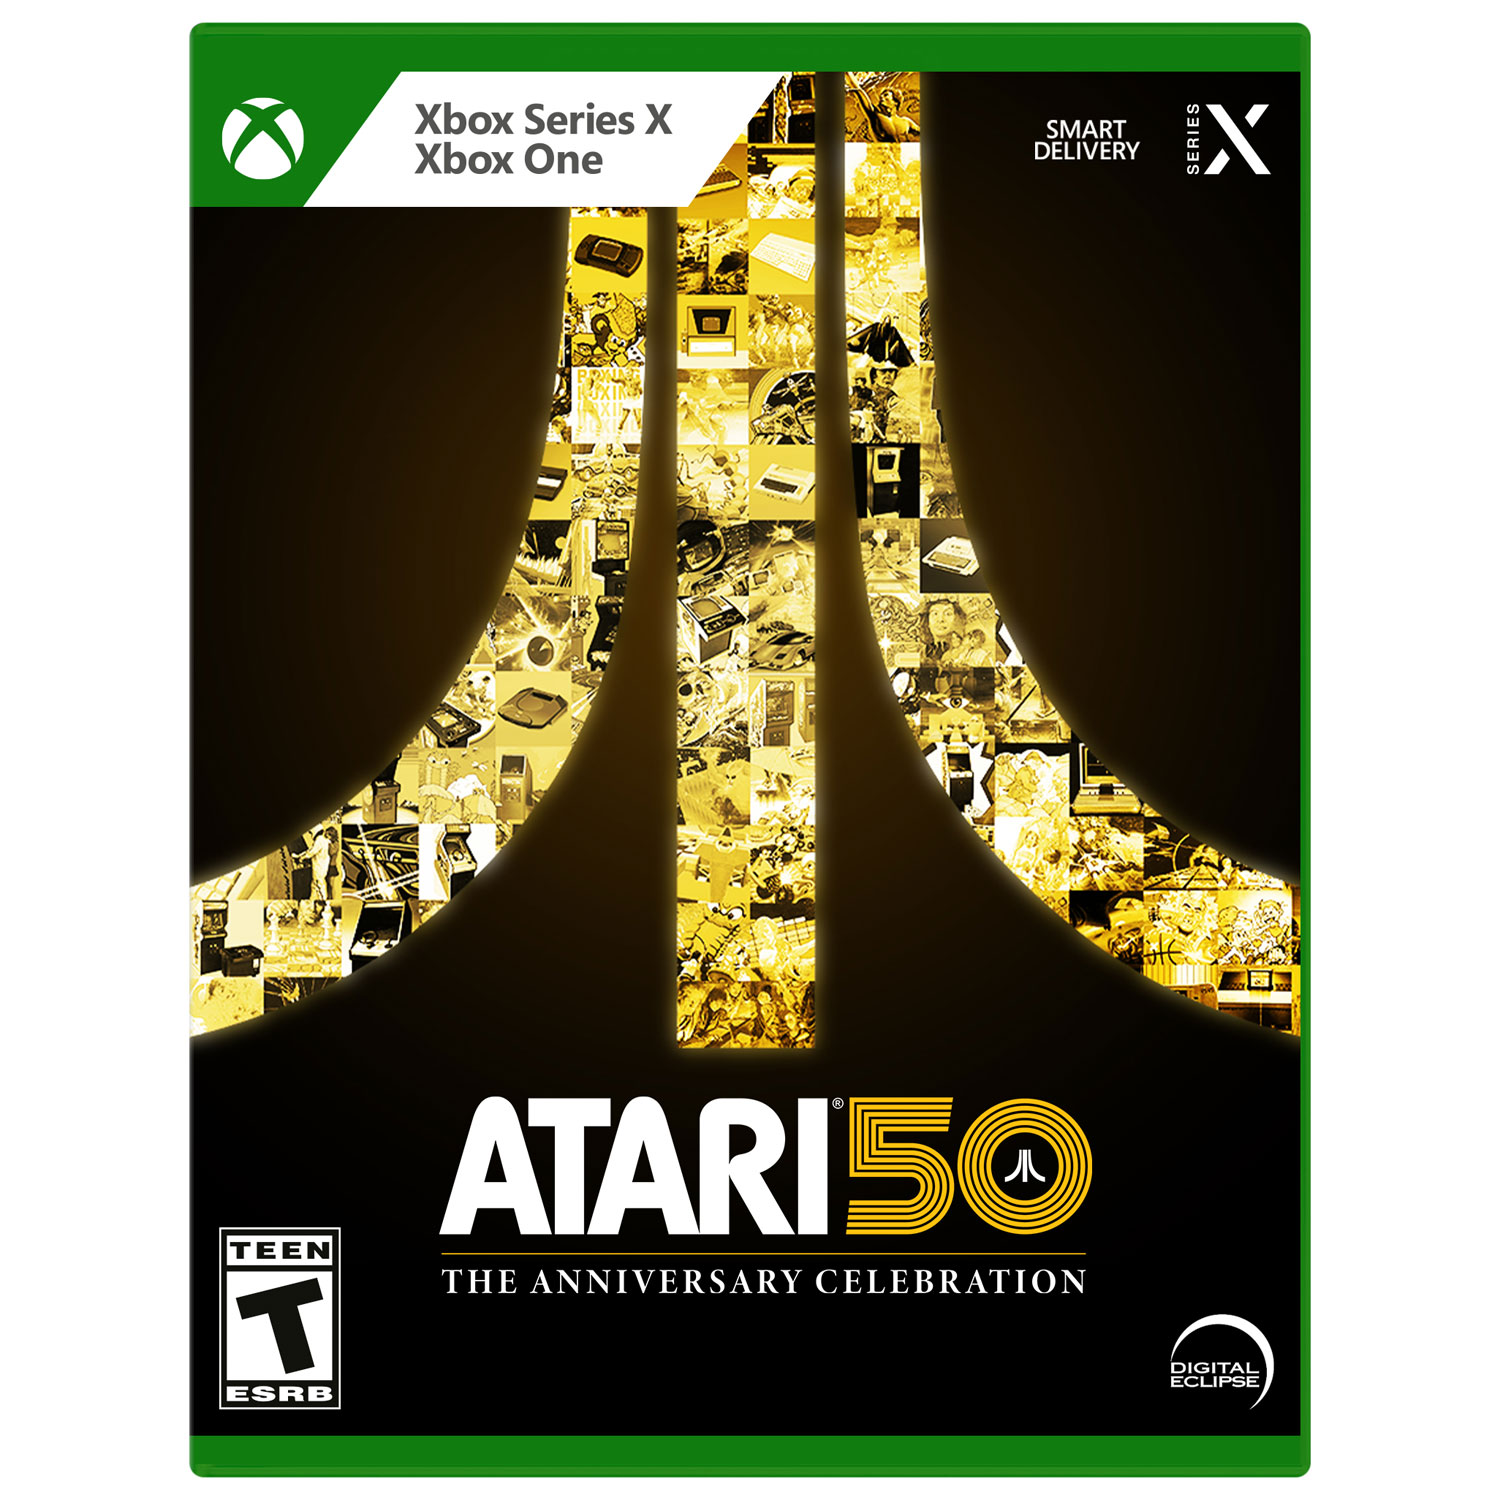 Atari 50: The Anniversary Celebration (Xbox Series X / Xbox One) - English